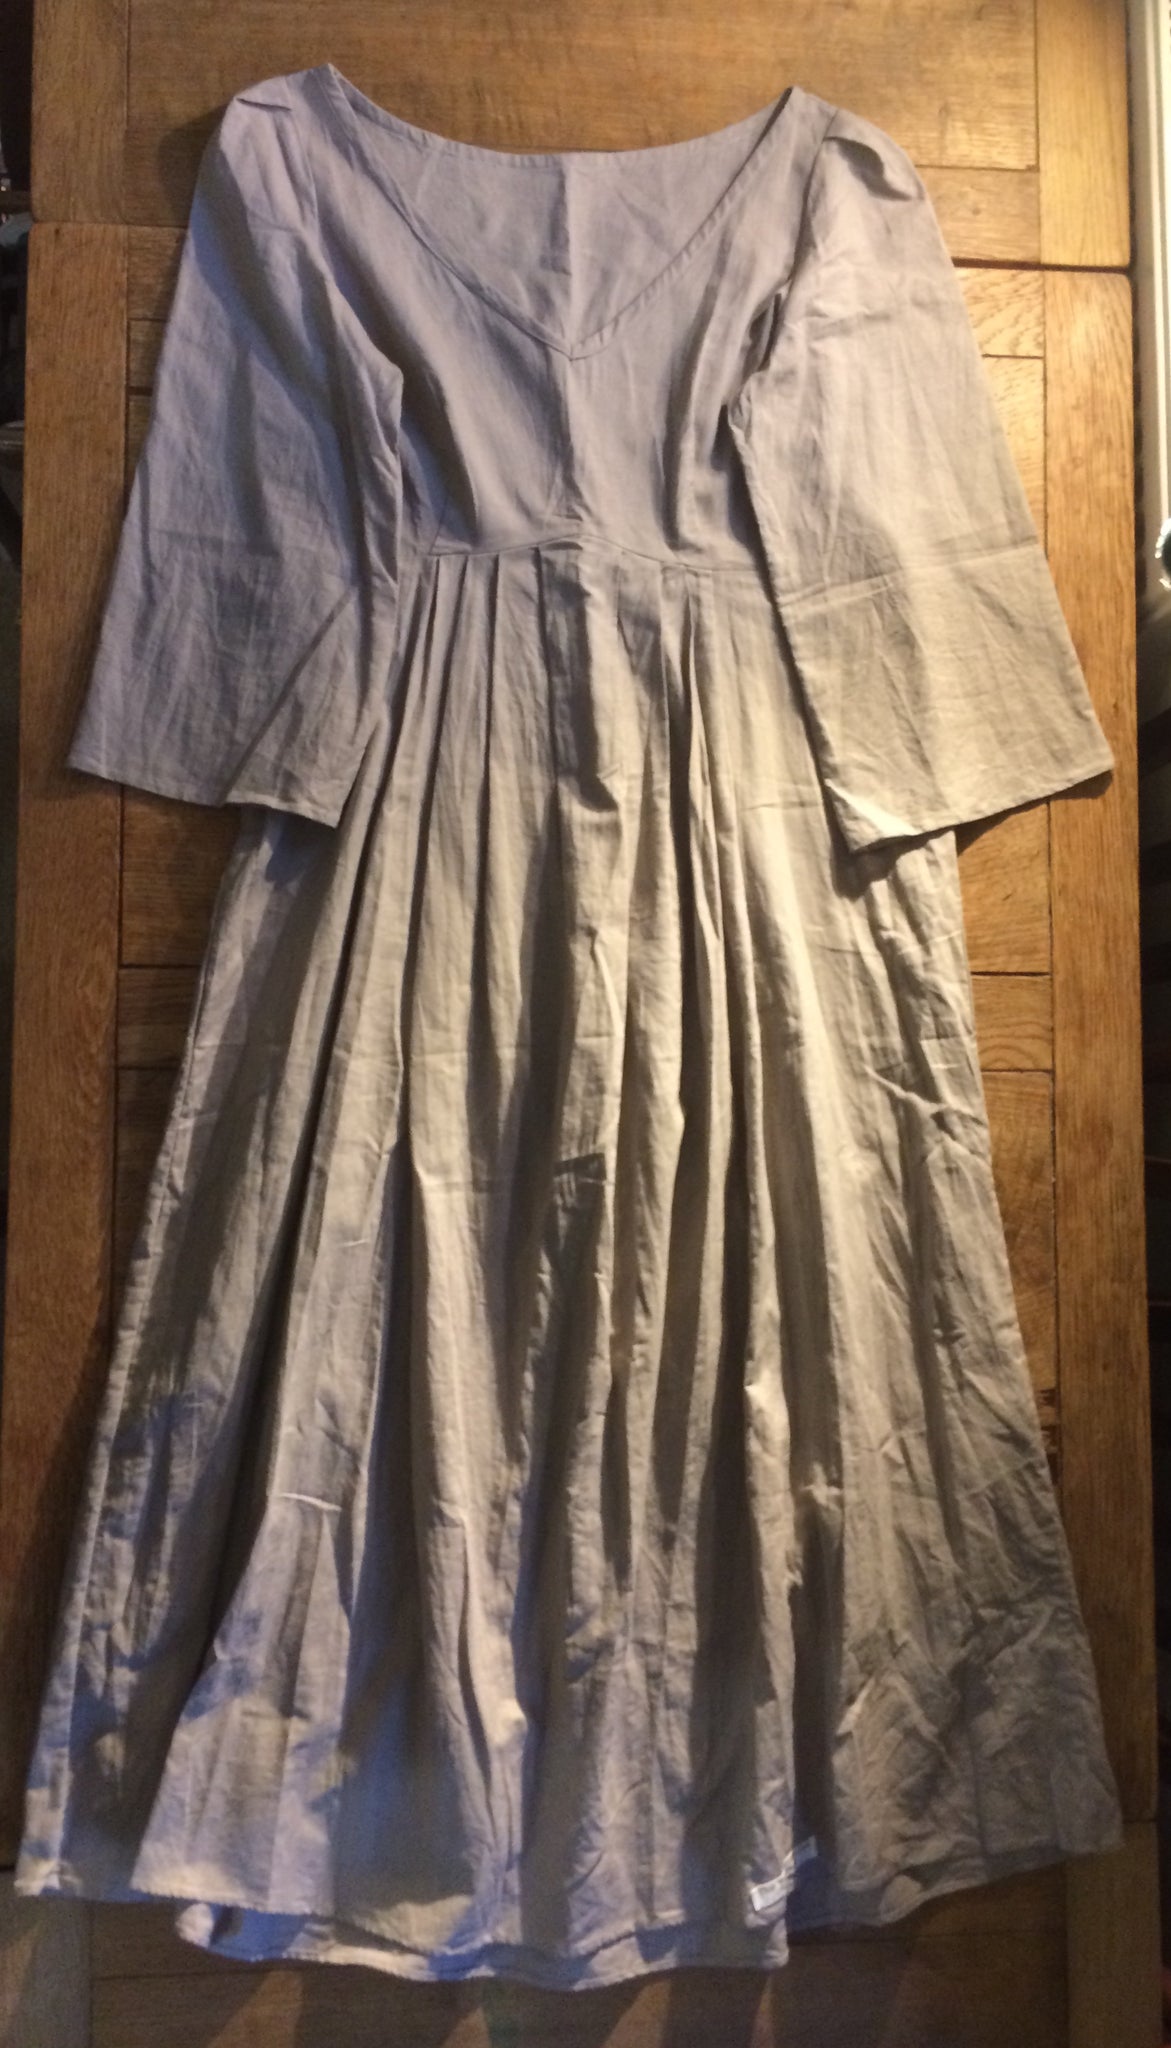 Mushroom shade women’s ramie dress (38”bust)